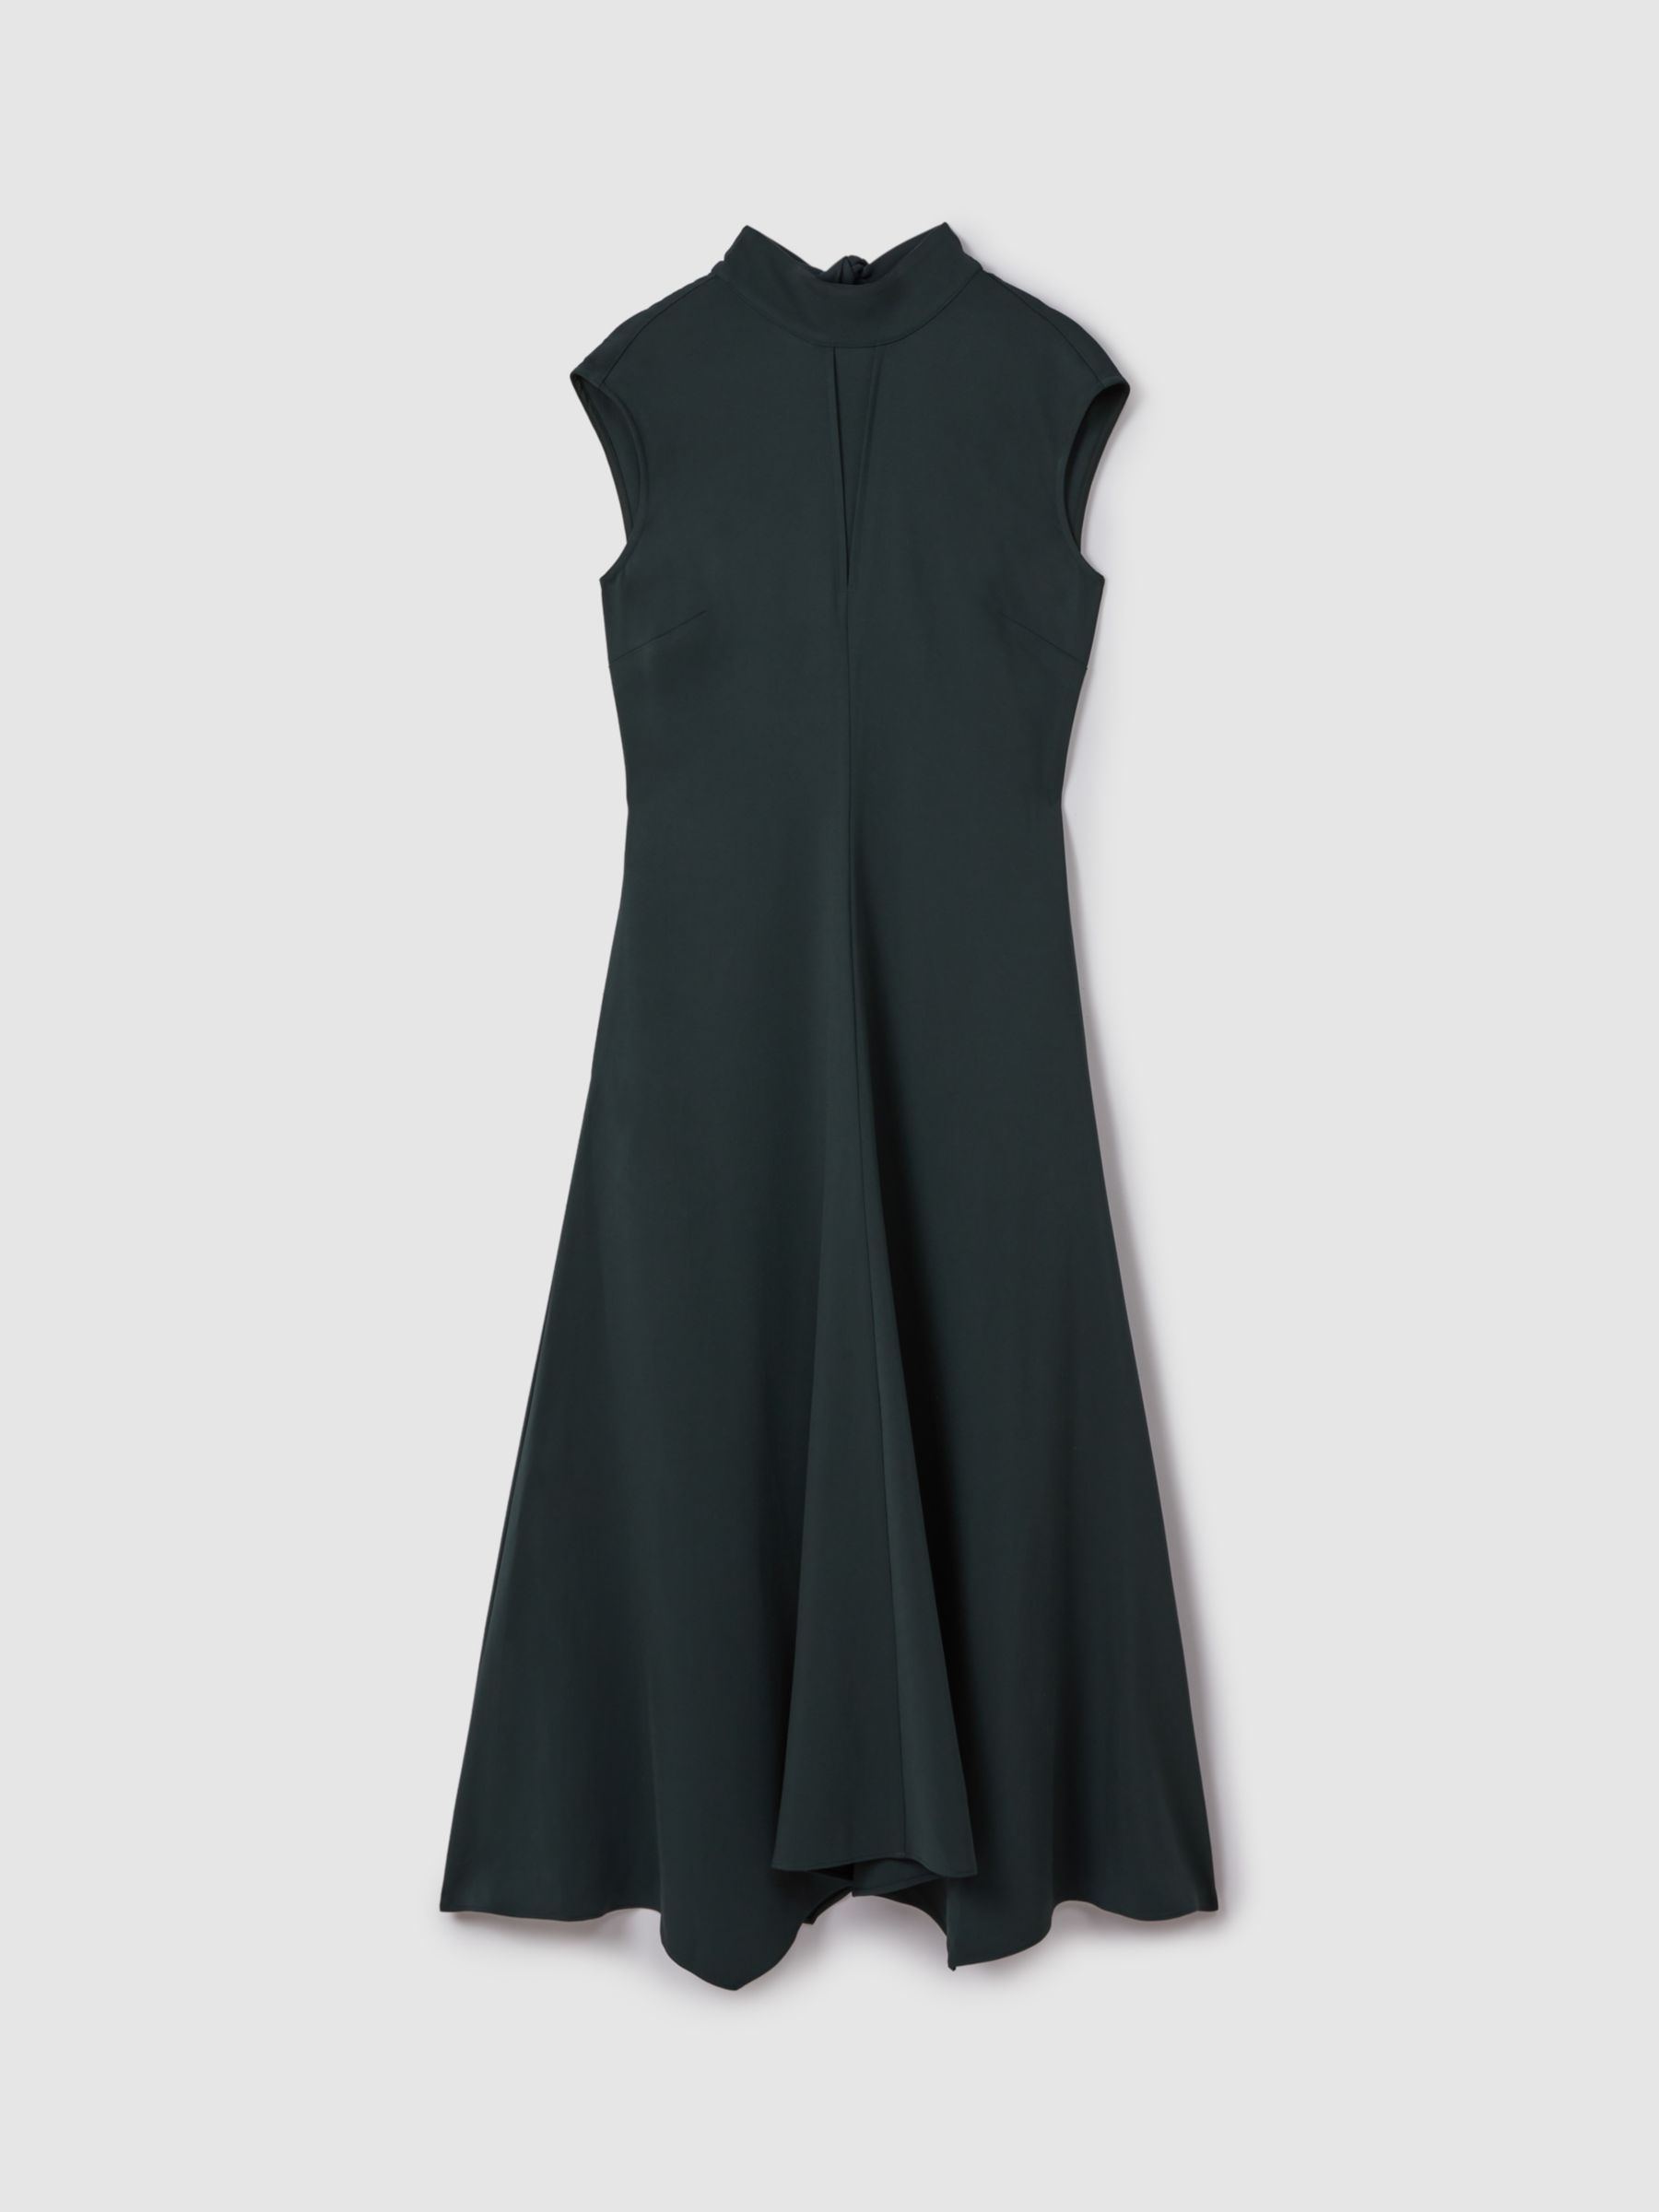 Reiss Petite Libby Occasion Midi Dress, Dark Green, 6